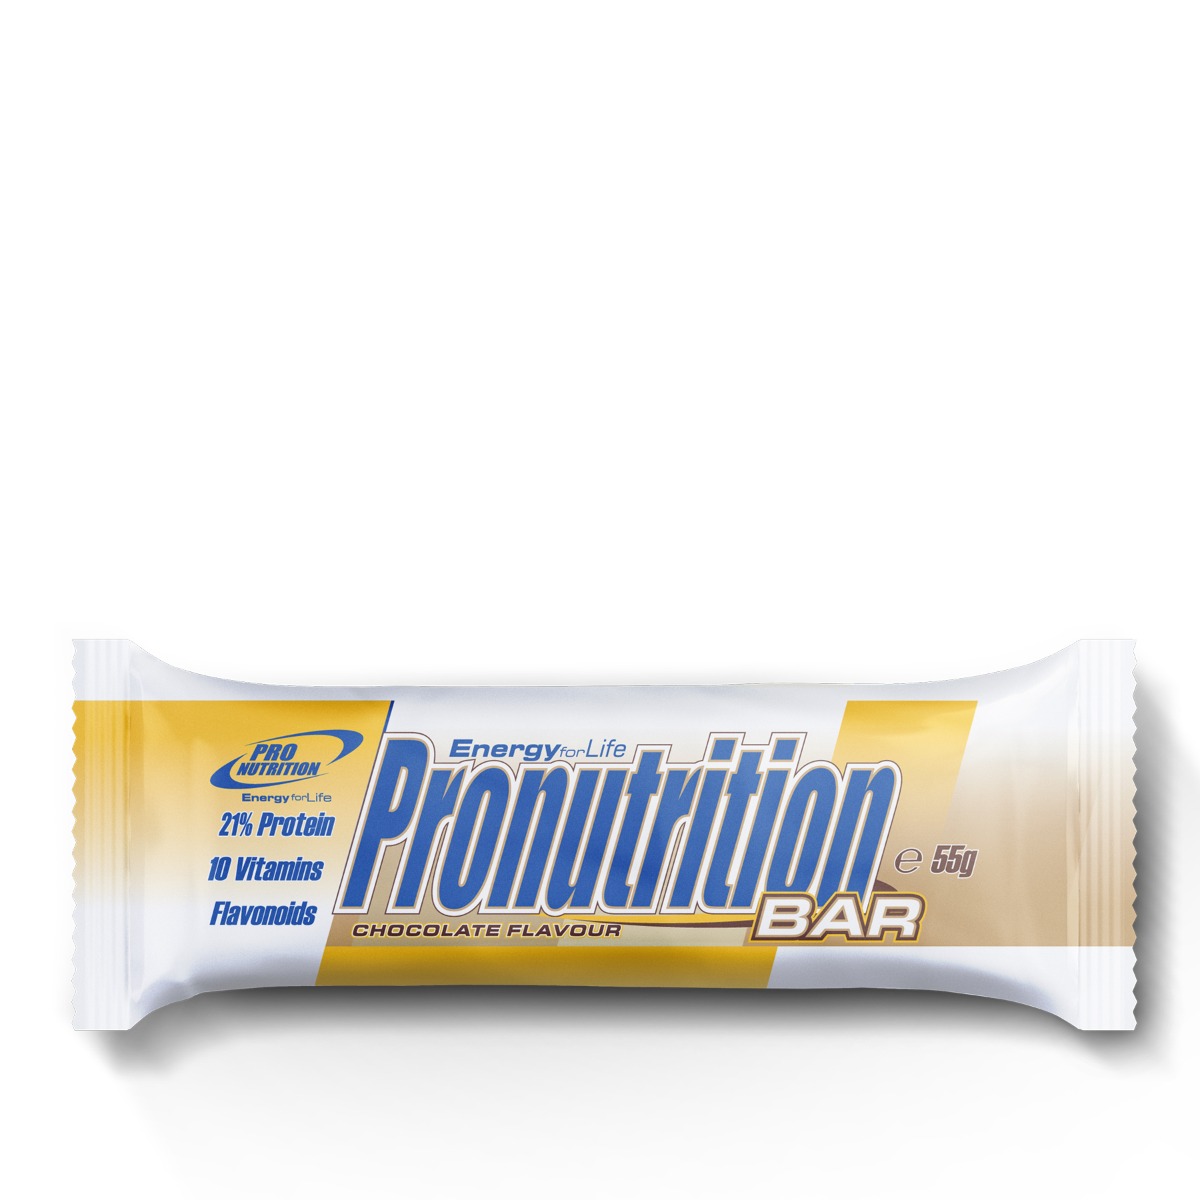 Baton proteic energizant cu aroma ciocolata, 55g, Pro Nutrition